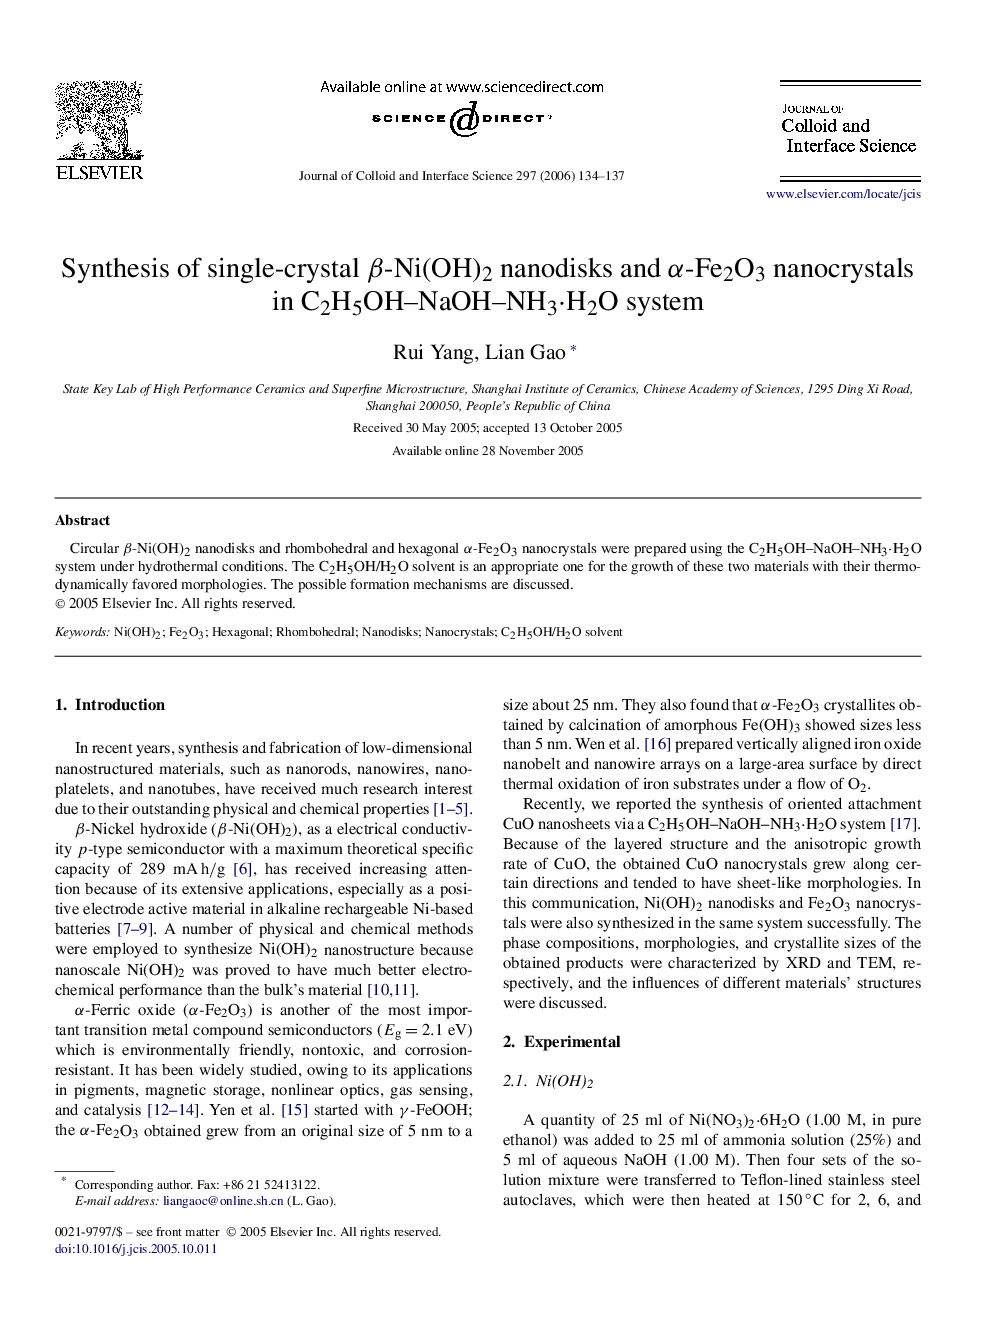 Synthesis of single-crystal Î²-Ni(OH)2 nanodisks and Î±-Fe2O3 nanocrystals in C2H5OH-NaOH-NH3âH2O system